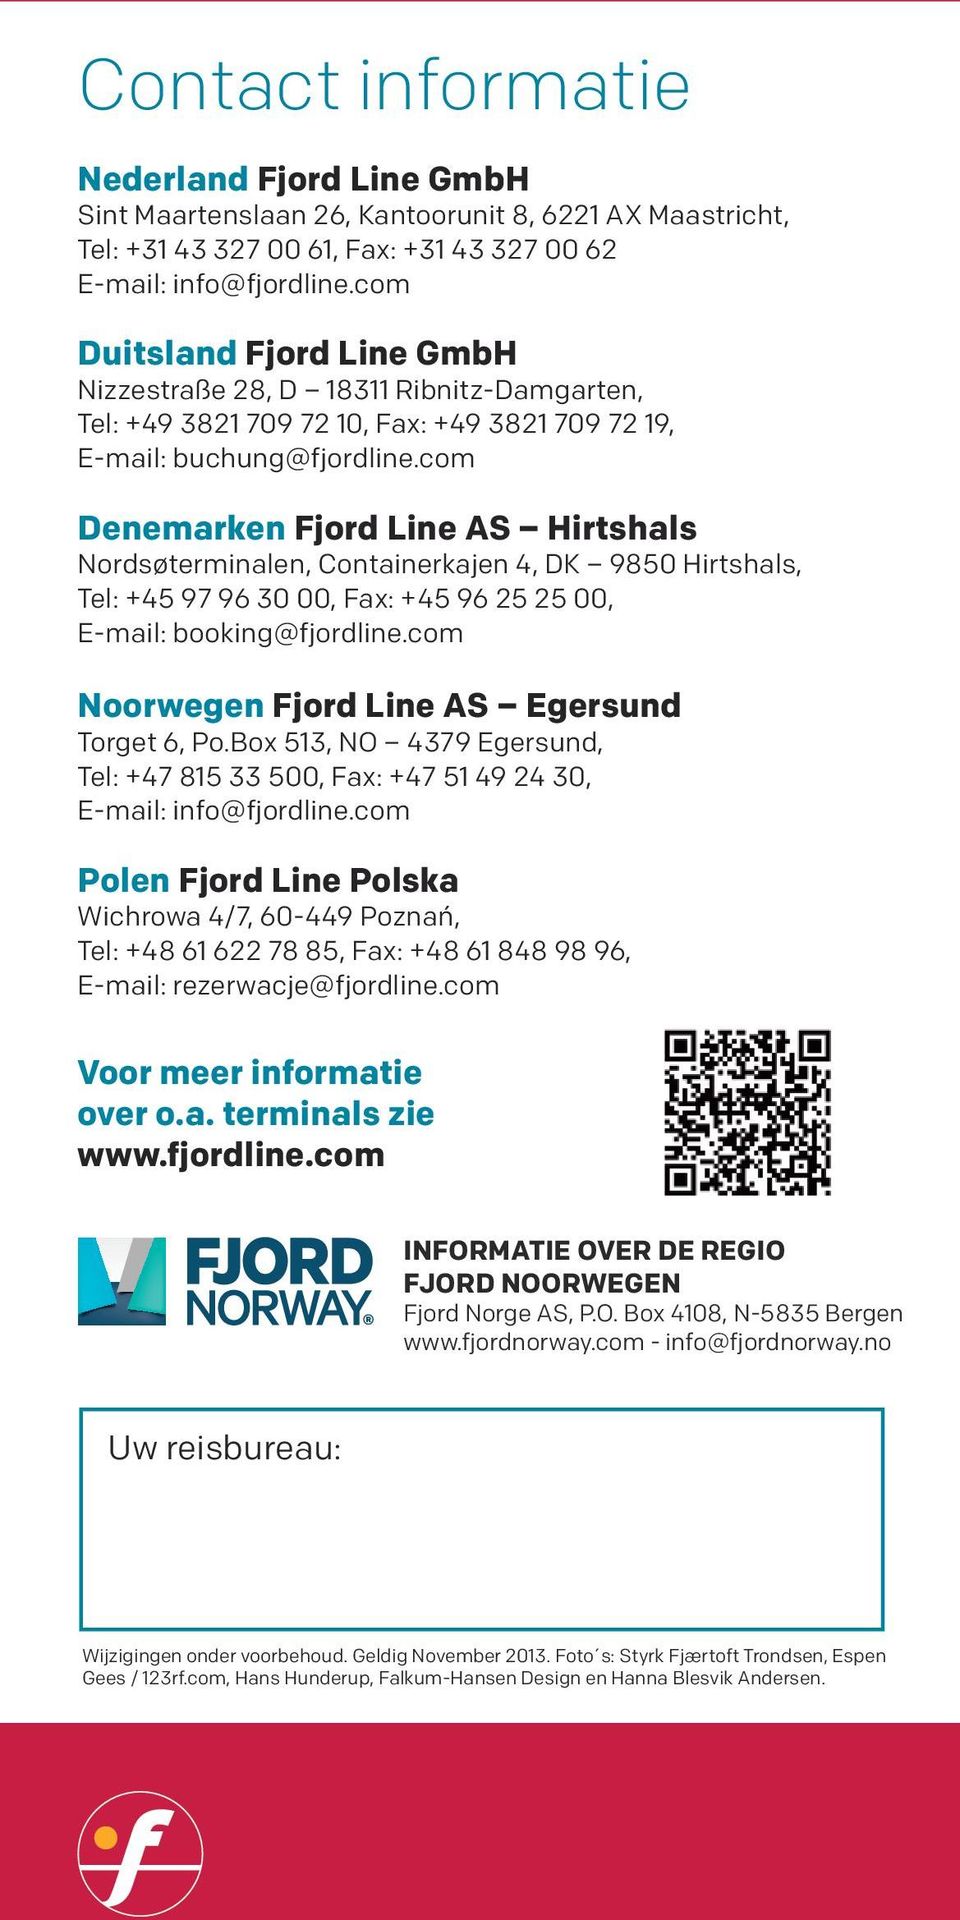 com Denemarken Fjord Line AS Nordsøterminalen, Containerkajen 4, DK 9850, Tel: +45 97 96 30 00, Fax: +45 96 25 25 00, E-mail: booking@fjordline.com Noorwegen Fjord Line AS Egersund Torget 6, Po.